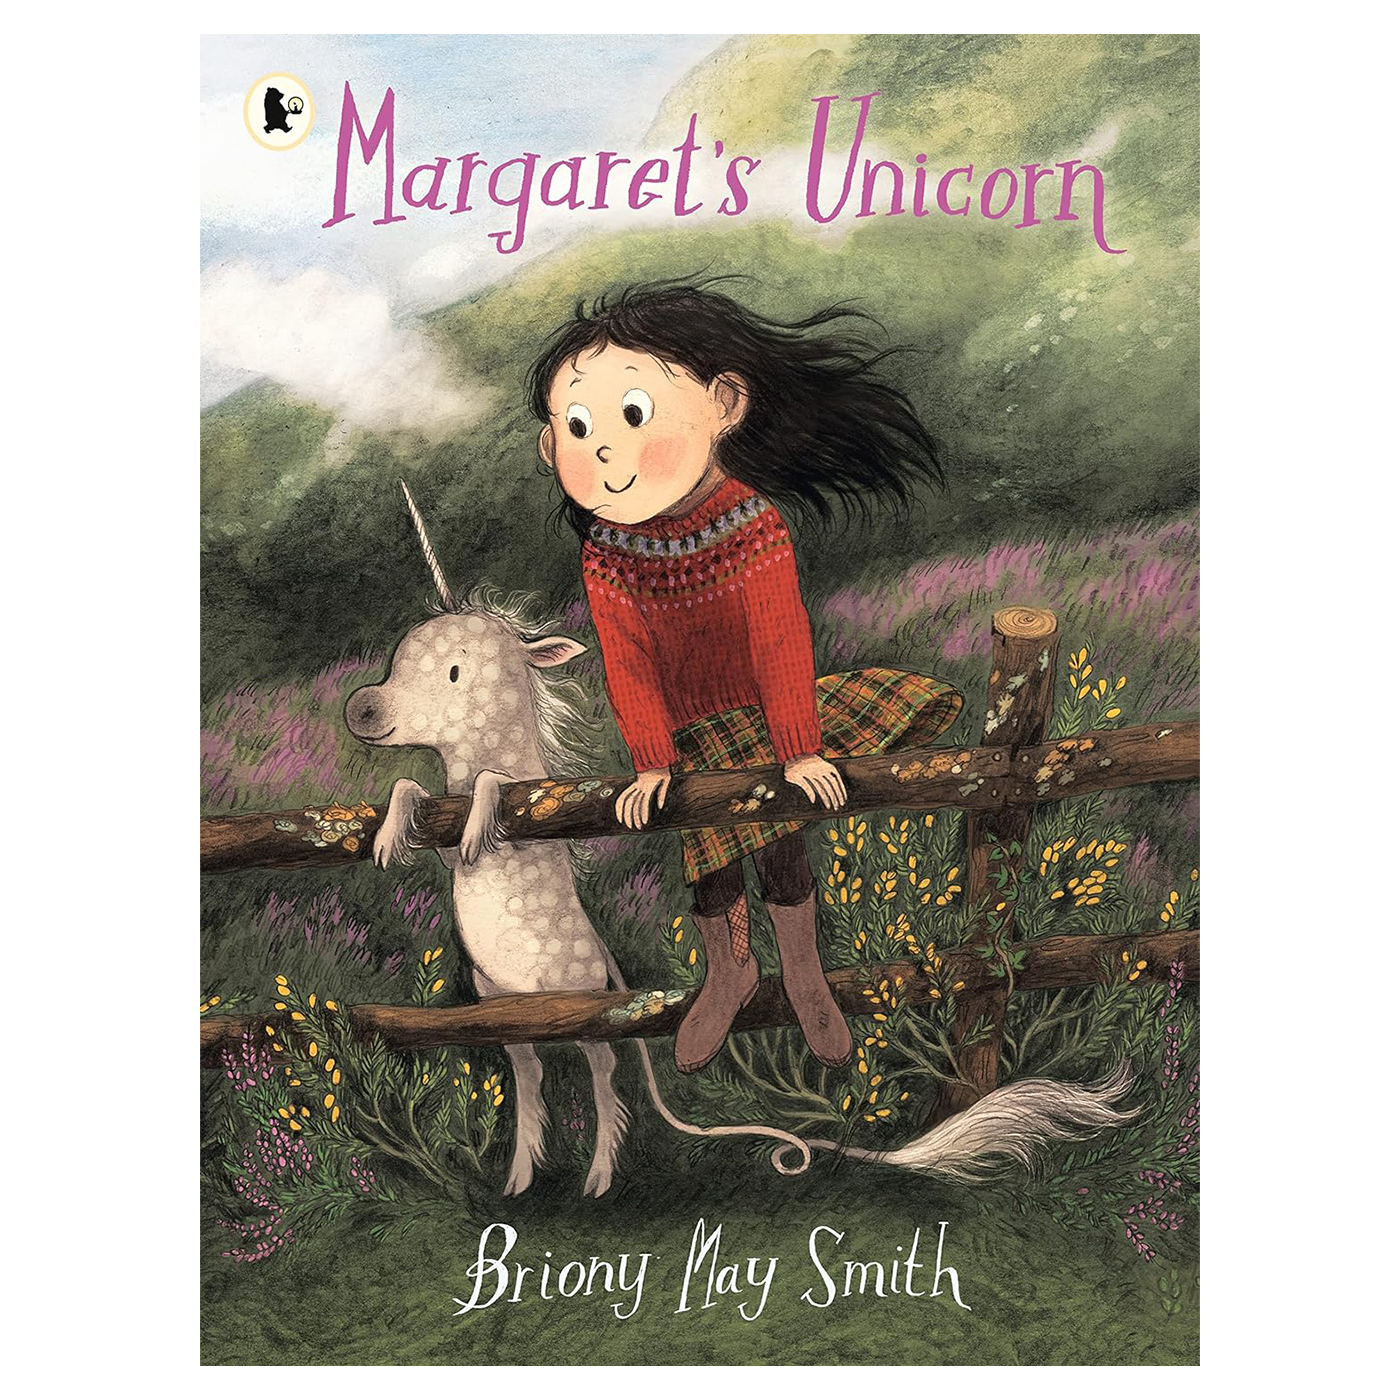  Margaret's Unicorn